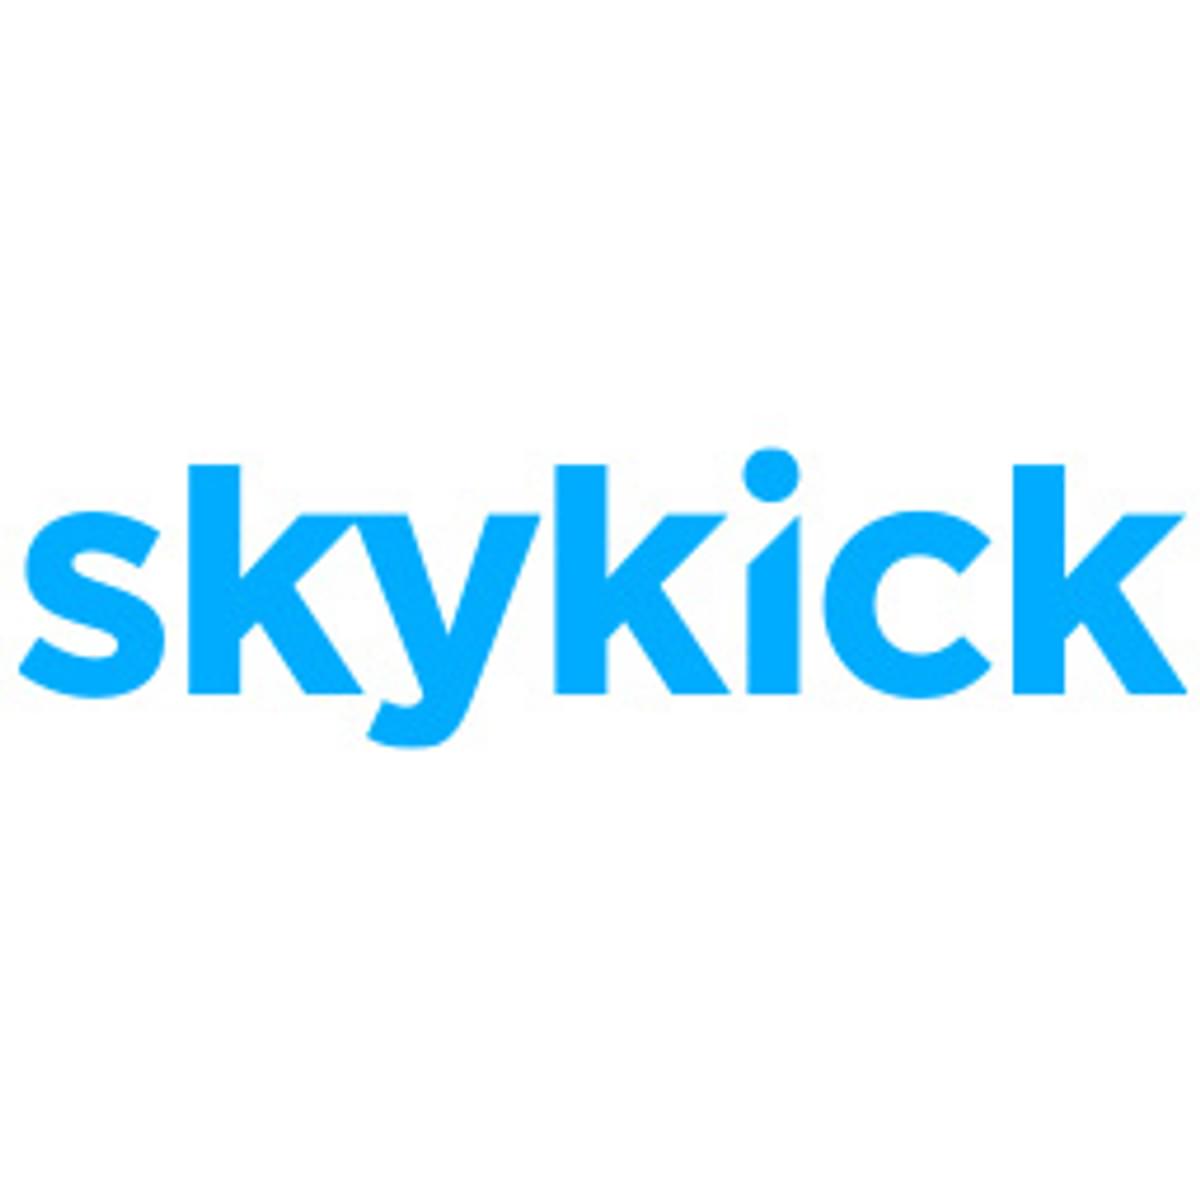 Skykick EMEA kantoor Amsterdam feestelijk geopend image